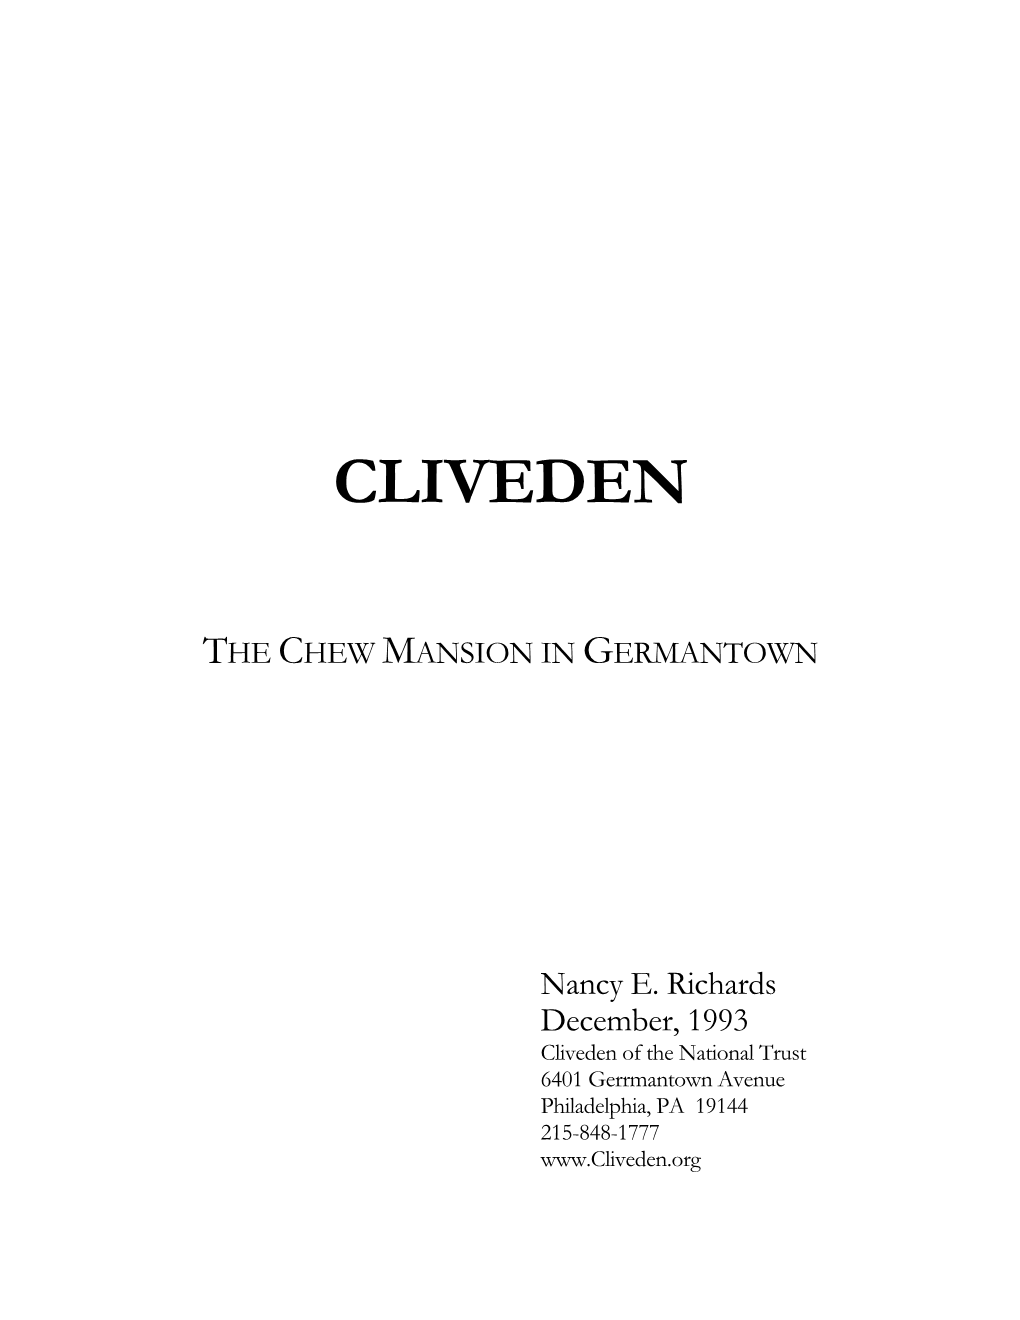 Cliveden: the Chew Mansion in Germantown